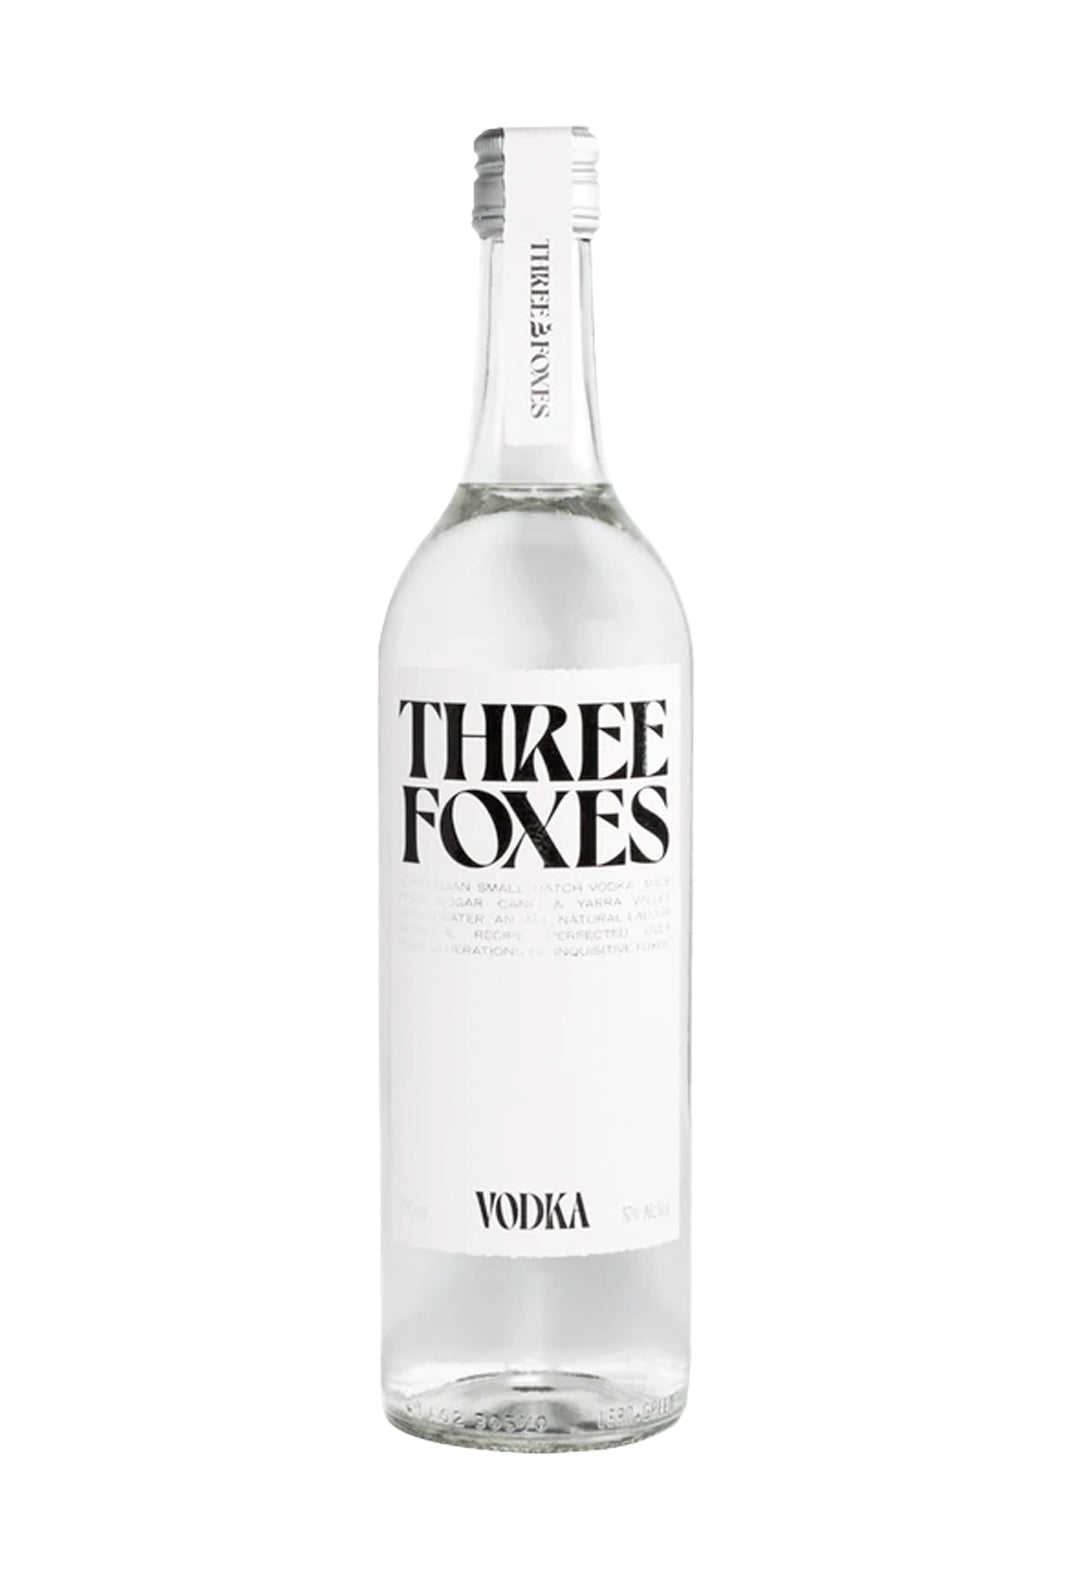 Three Foxes Australian Vodka 37% 750ml | | Shop online at Spirits of France